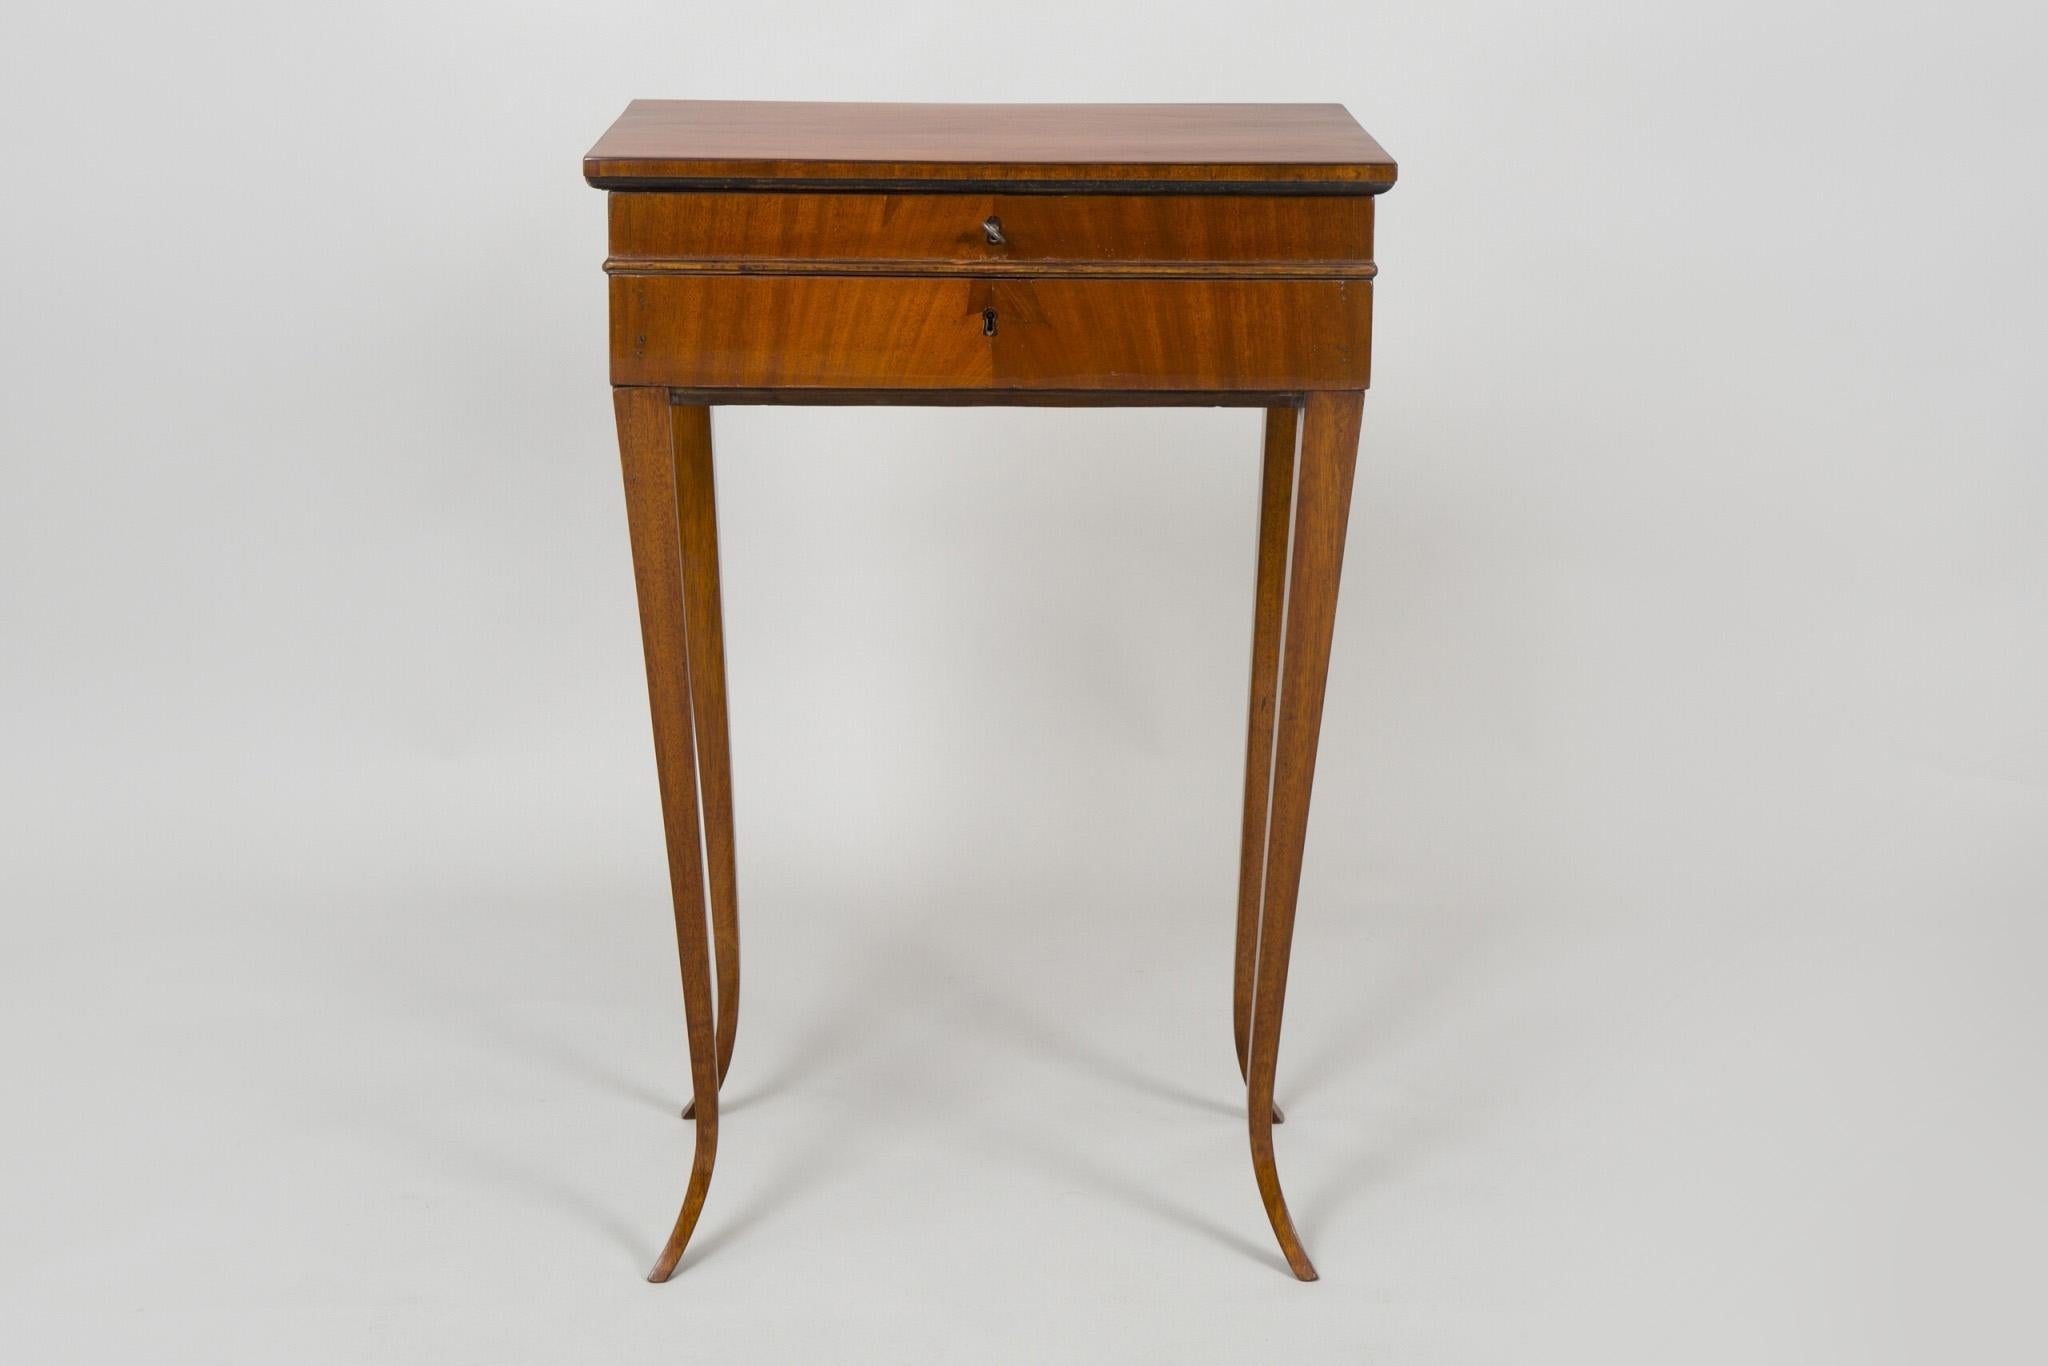 Biedermeier table
Completely restored.
Shellac polish.
Material: Mahogany
Source: Austria
Period: 1820-1829.